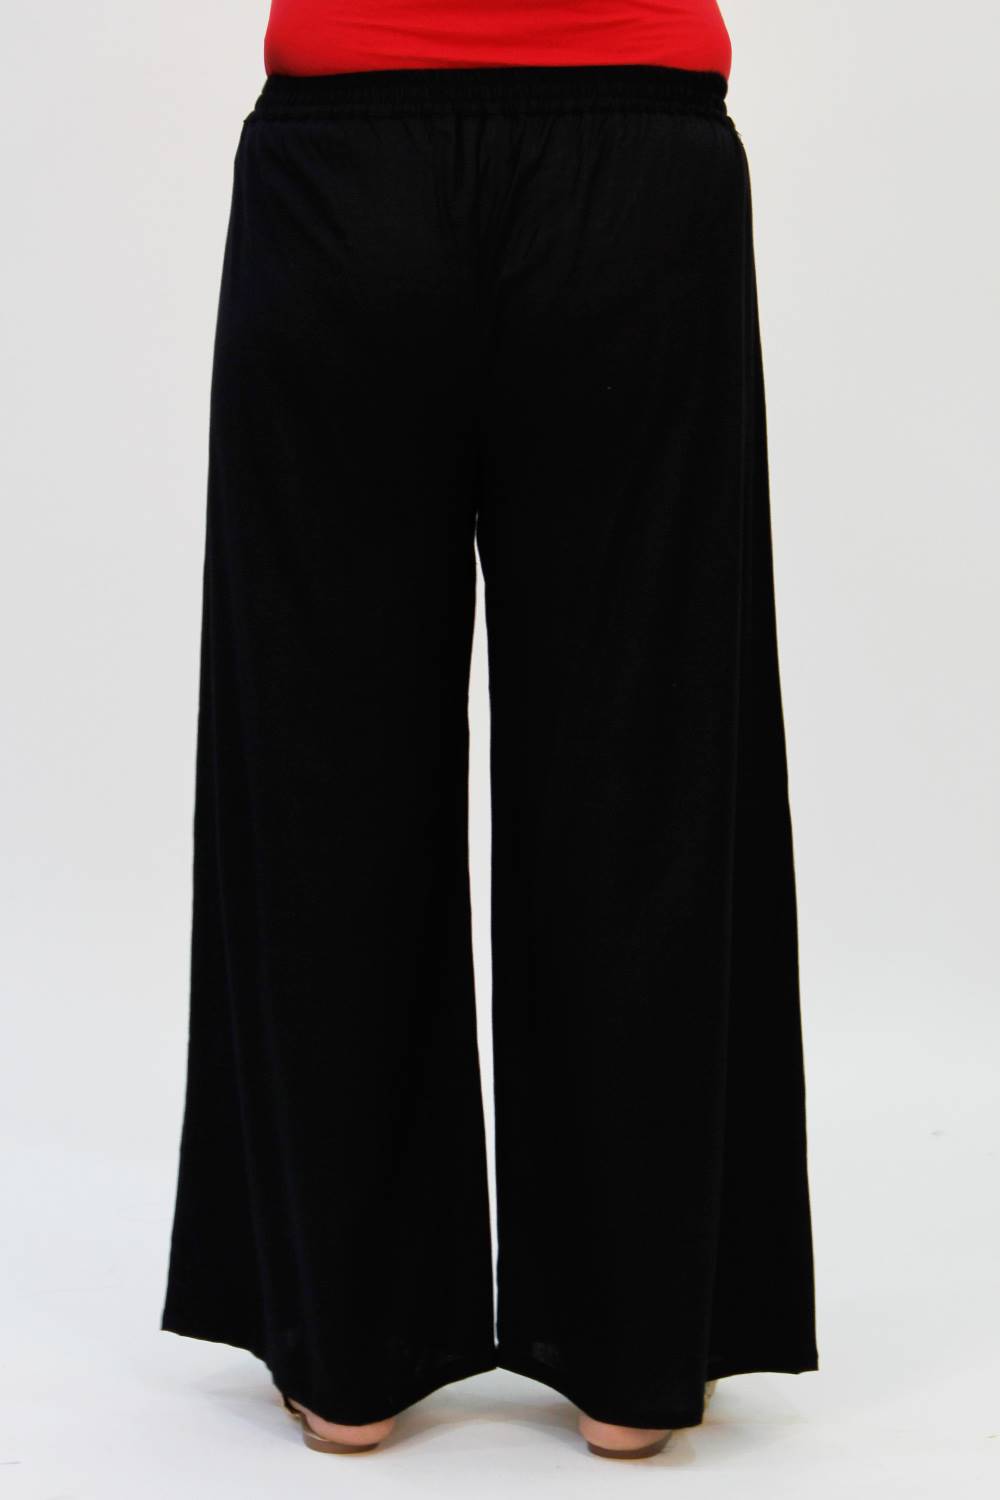 Buy Lastinch Women's Plus Size Black Wrap Trouser (Medium)(Size 34